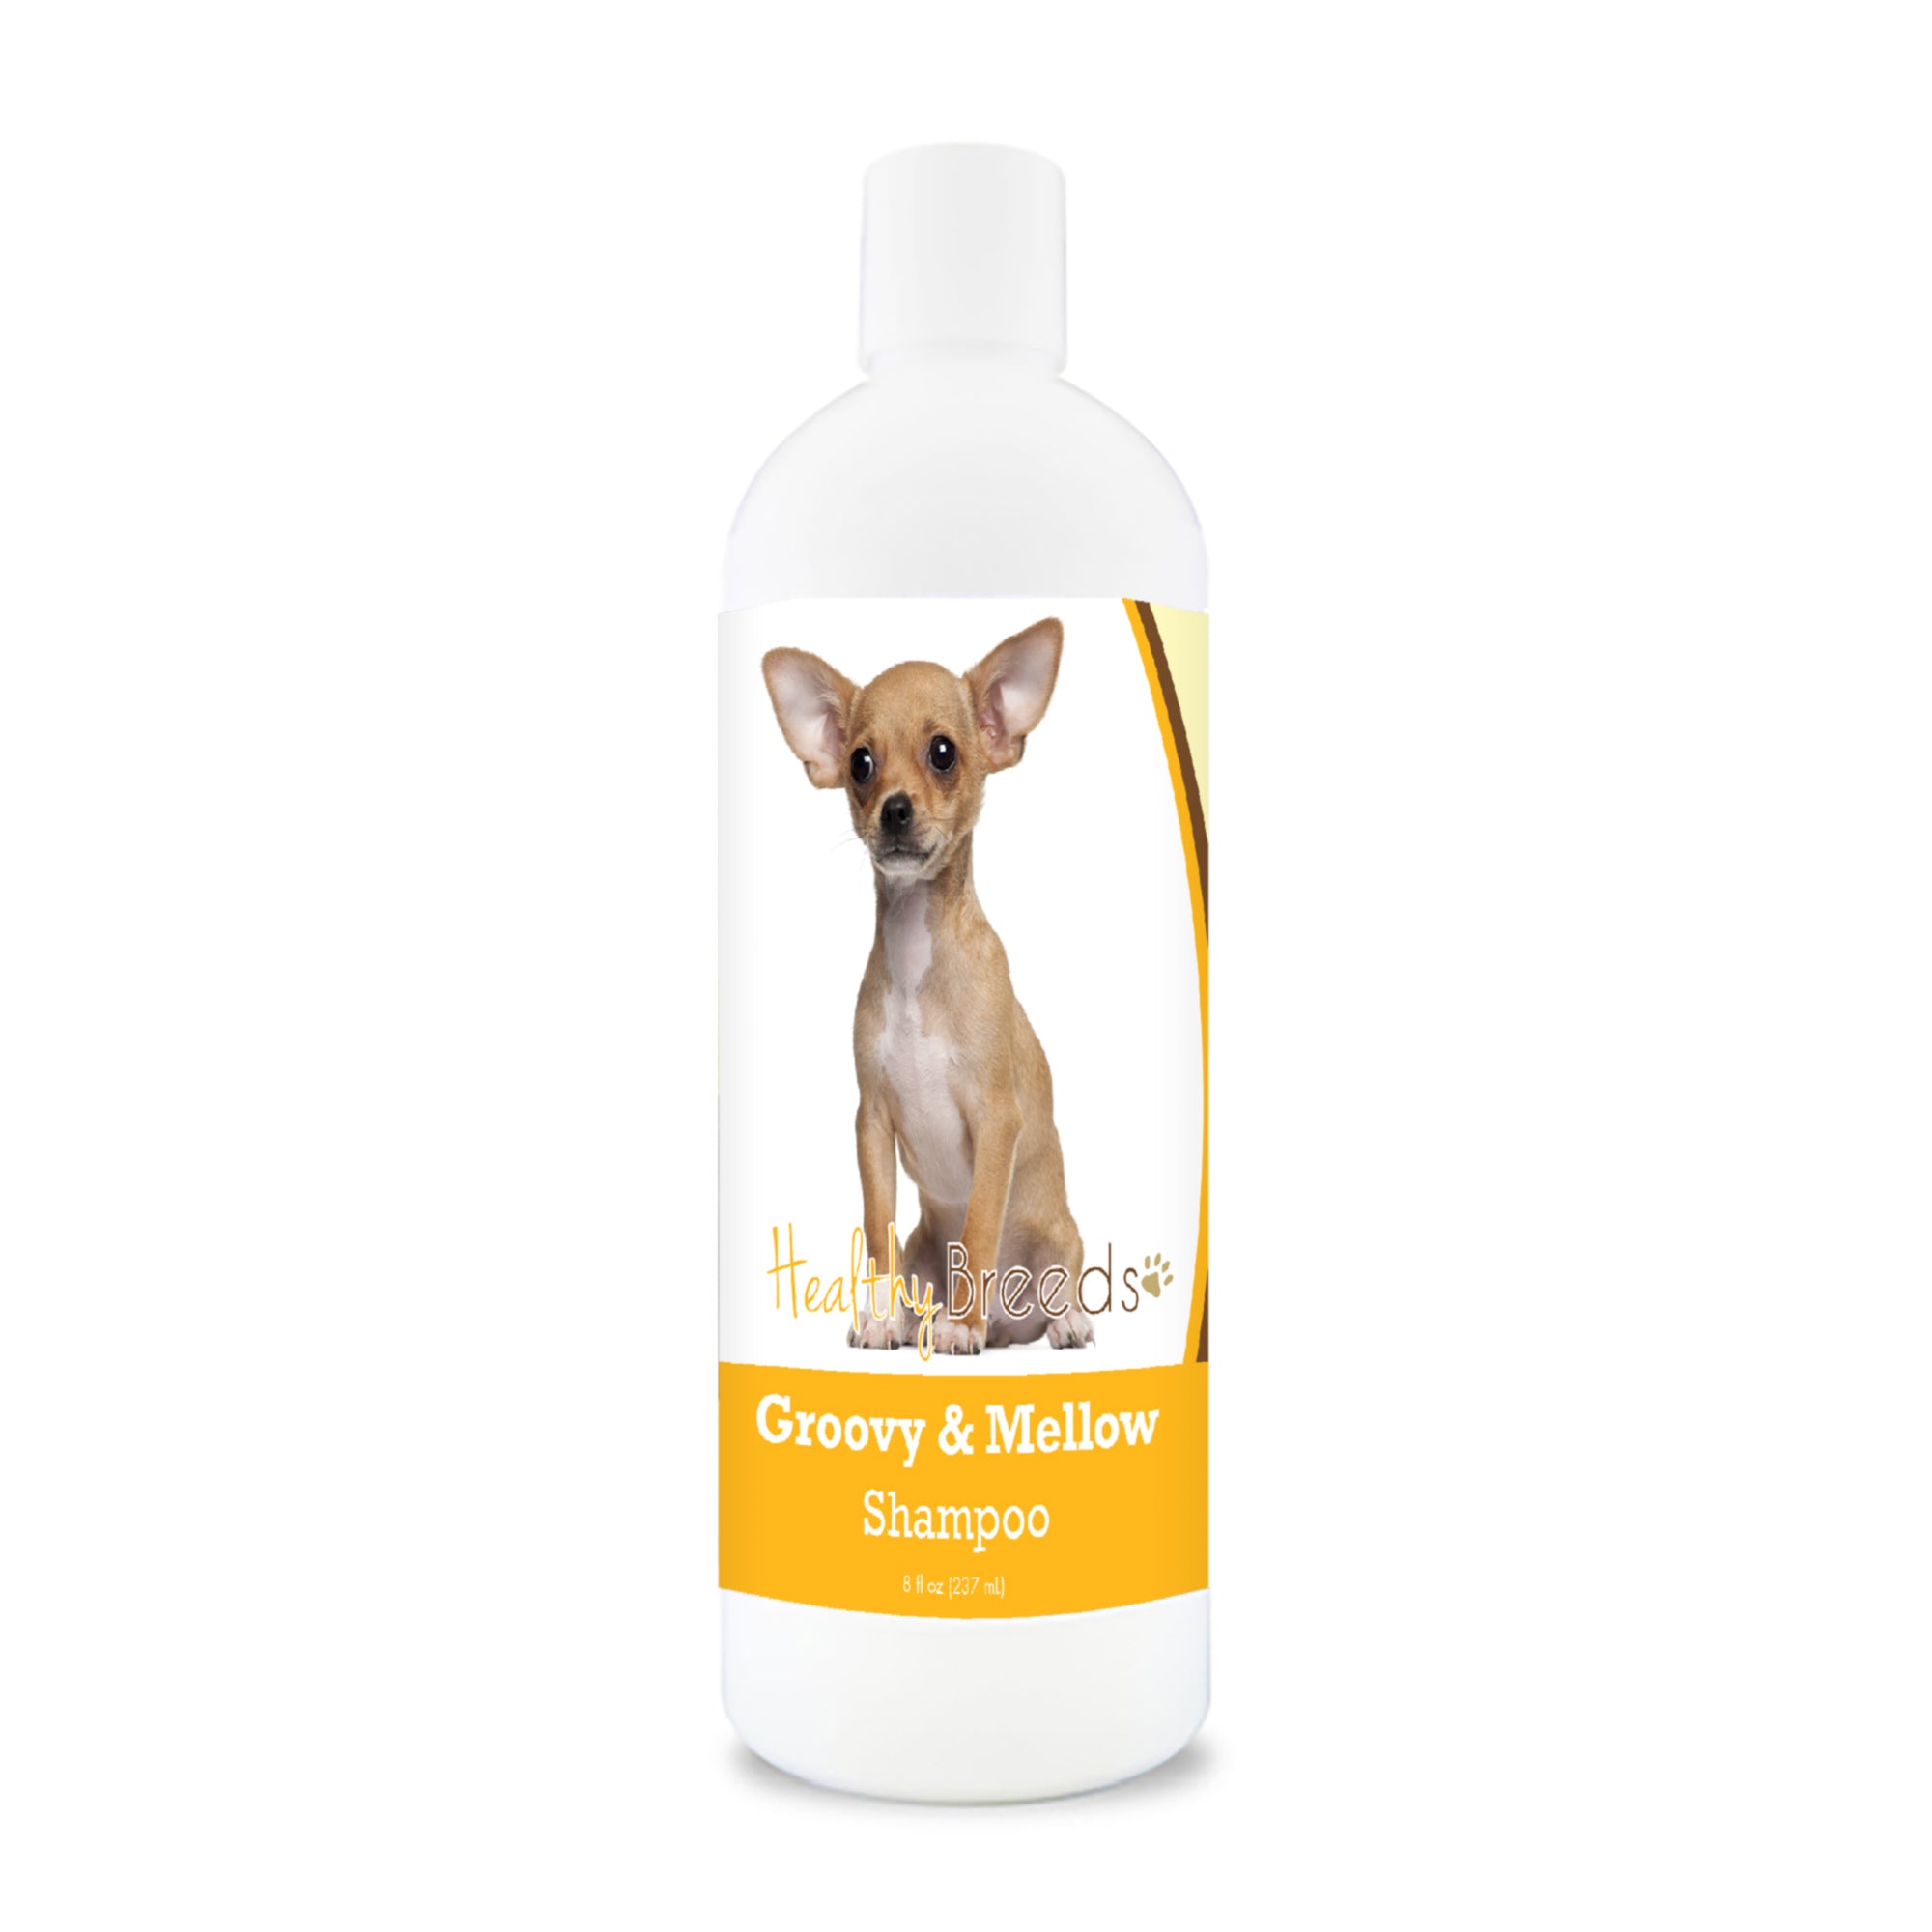 Chihuahua Groovy & Mellow Shampoo 8 oz